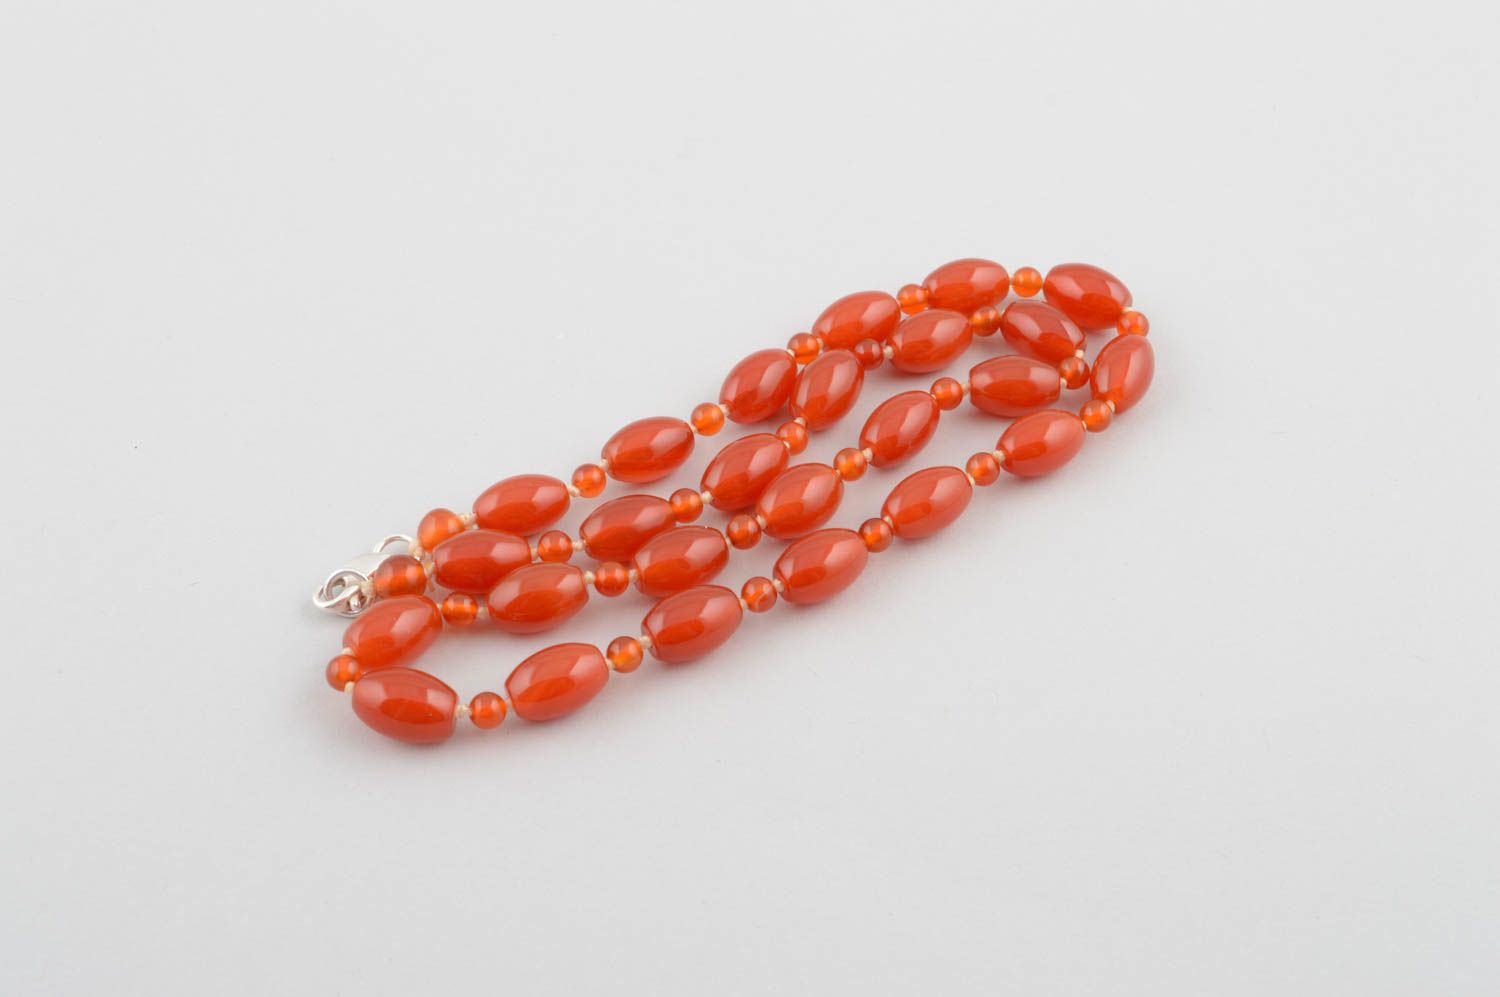 Handmade beads design bead necklace jewelry with cornelian design necklace photo 3